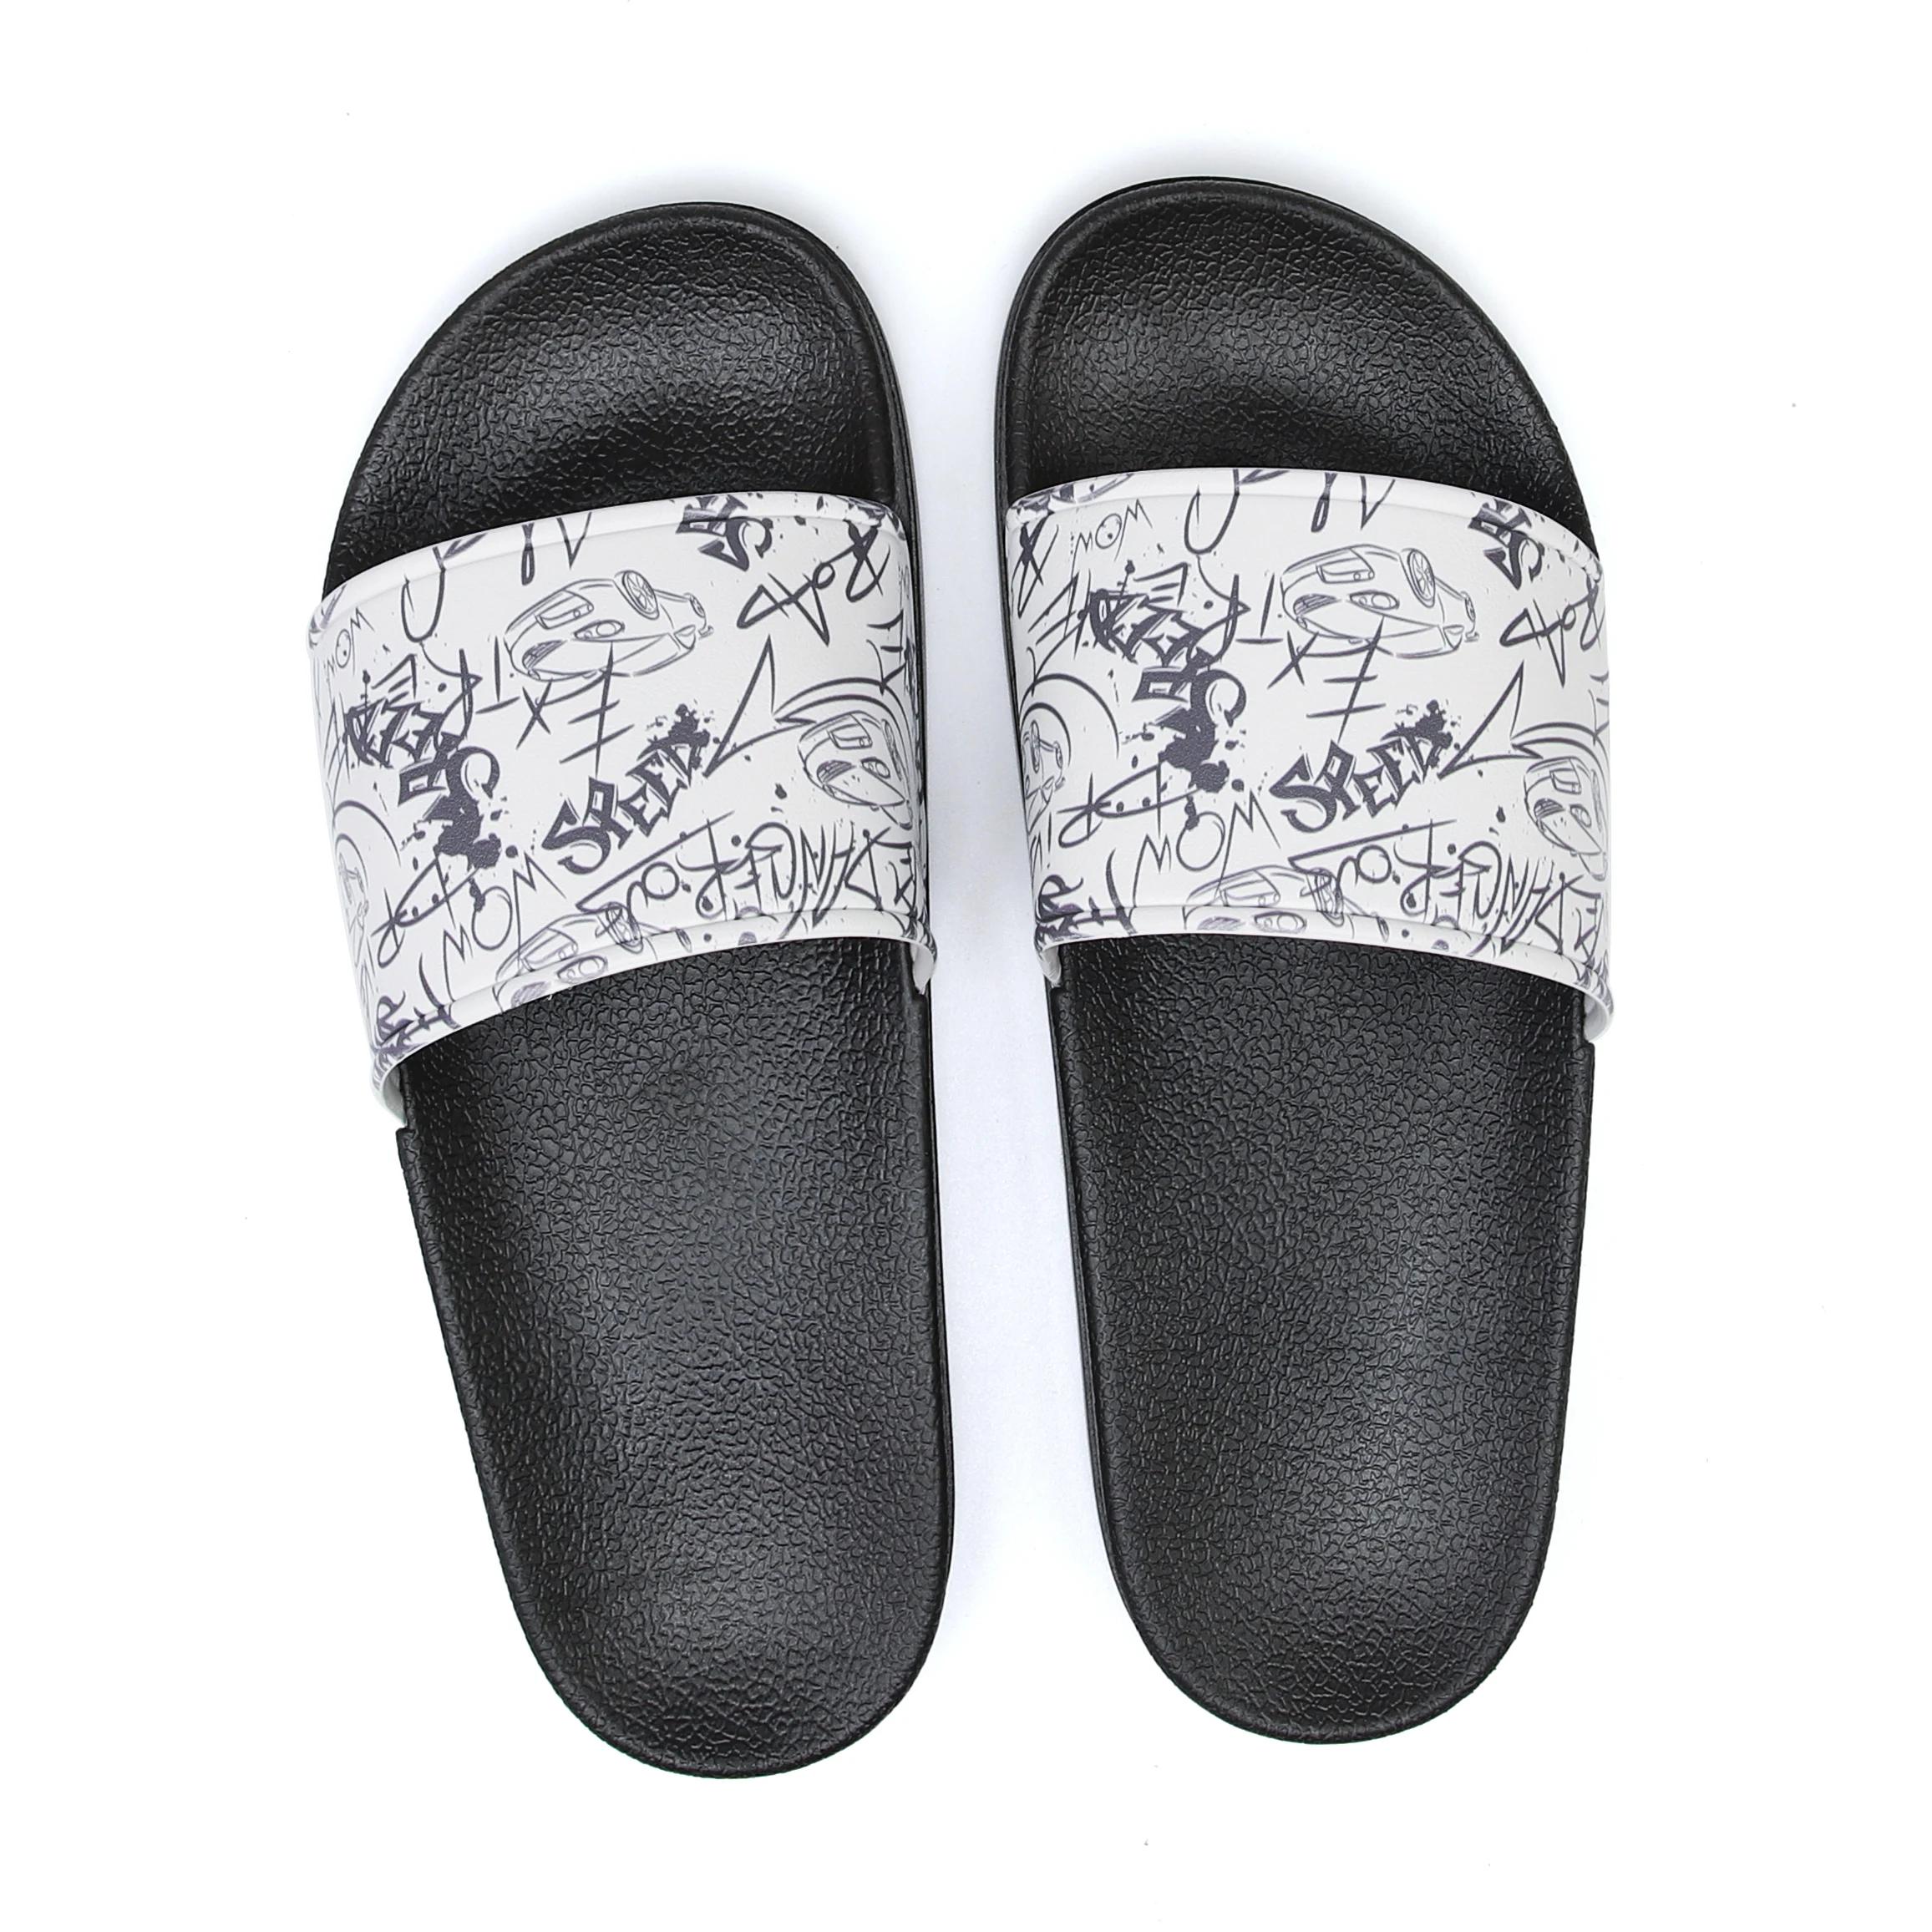 

Car Pattern Design Slide Slipper Anti-skid Soft Hard-wearing New Design Most Fashion Men PVC Sole Sandal, Black white